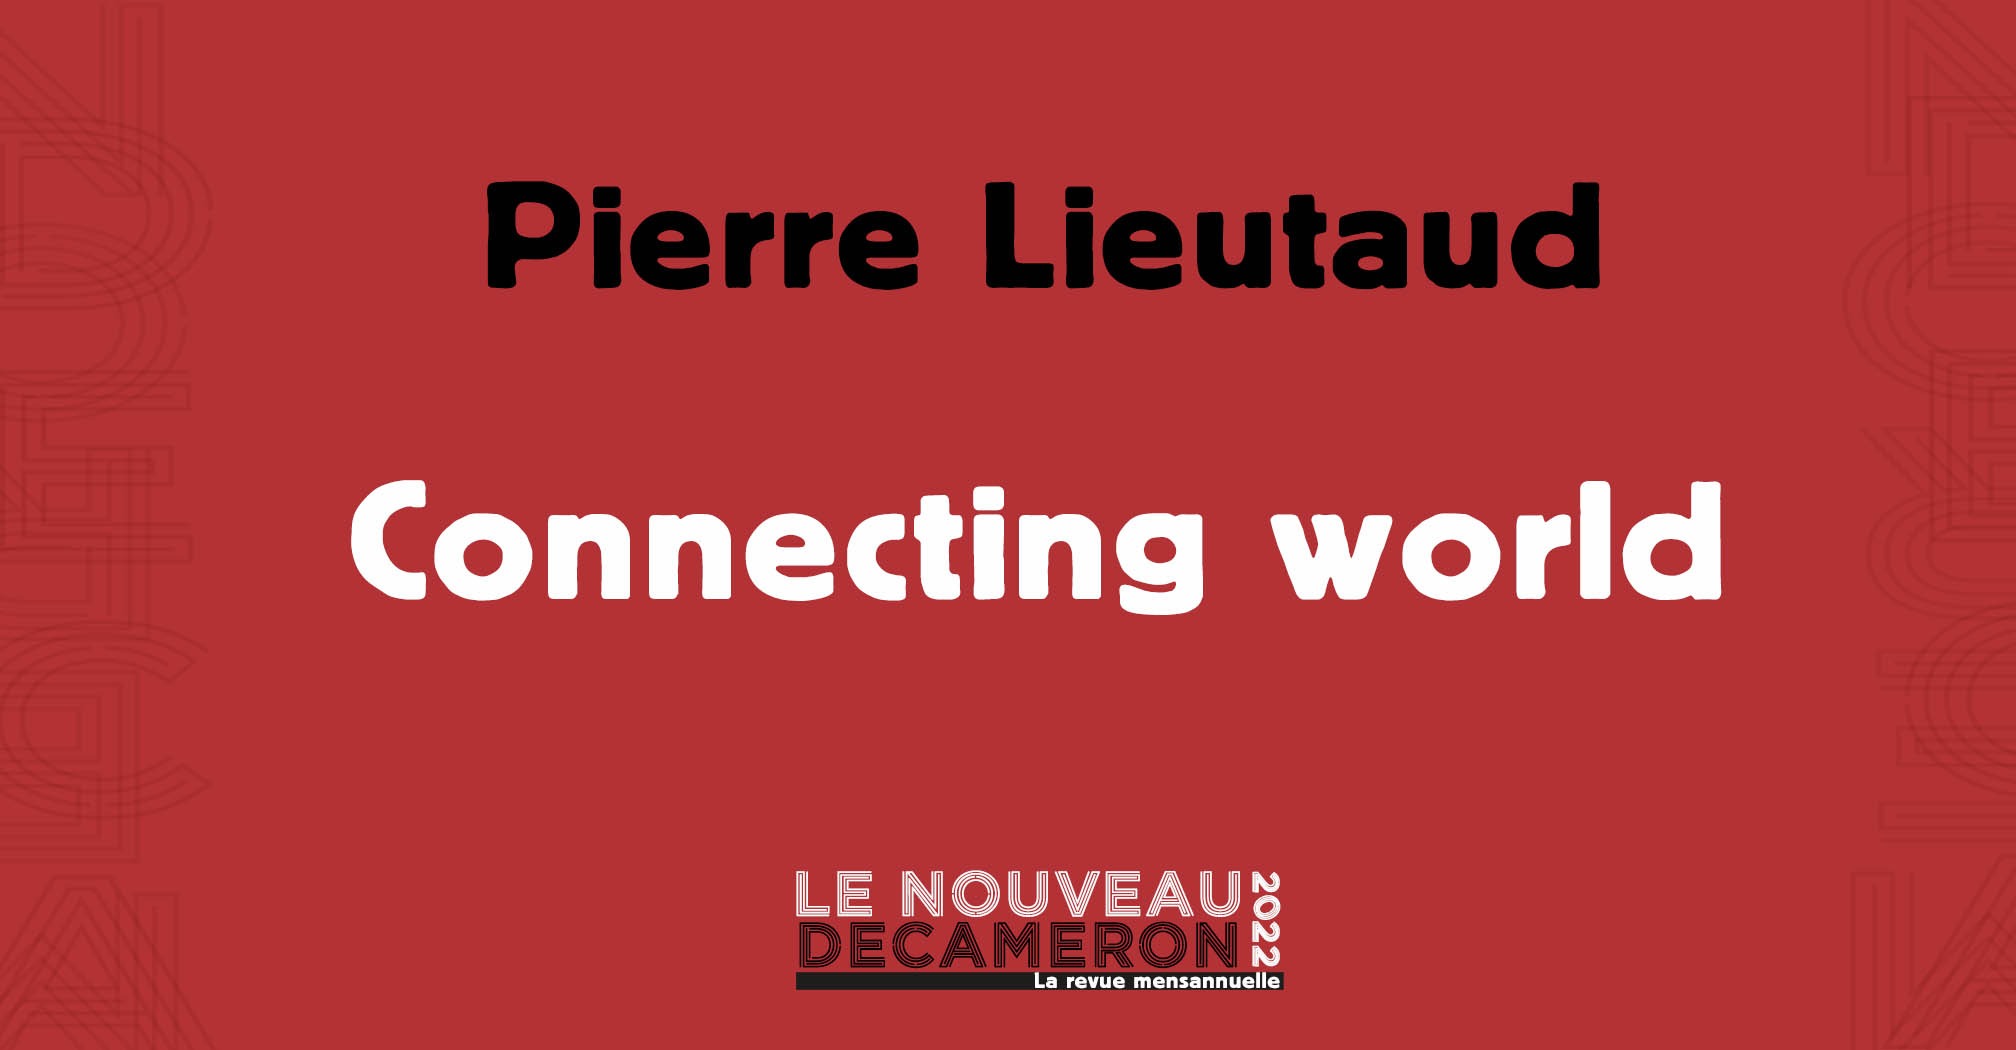 Pierre Lieutaud - Connecting world